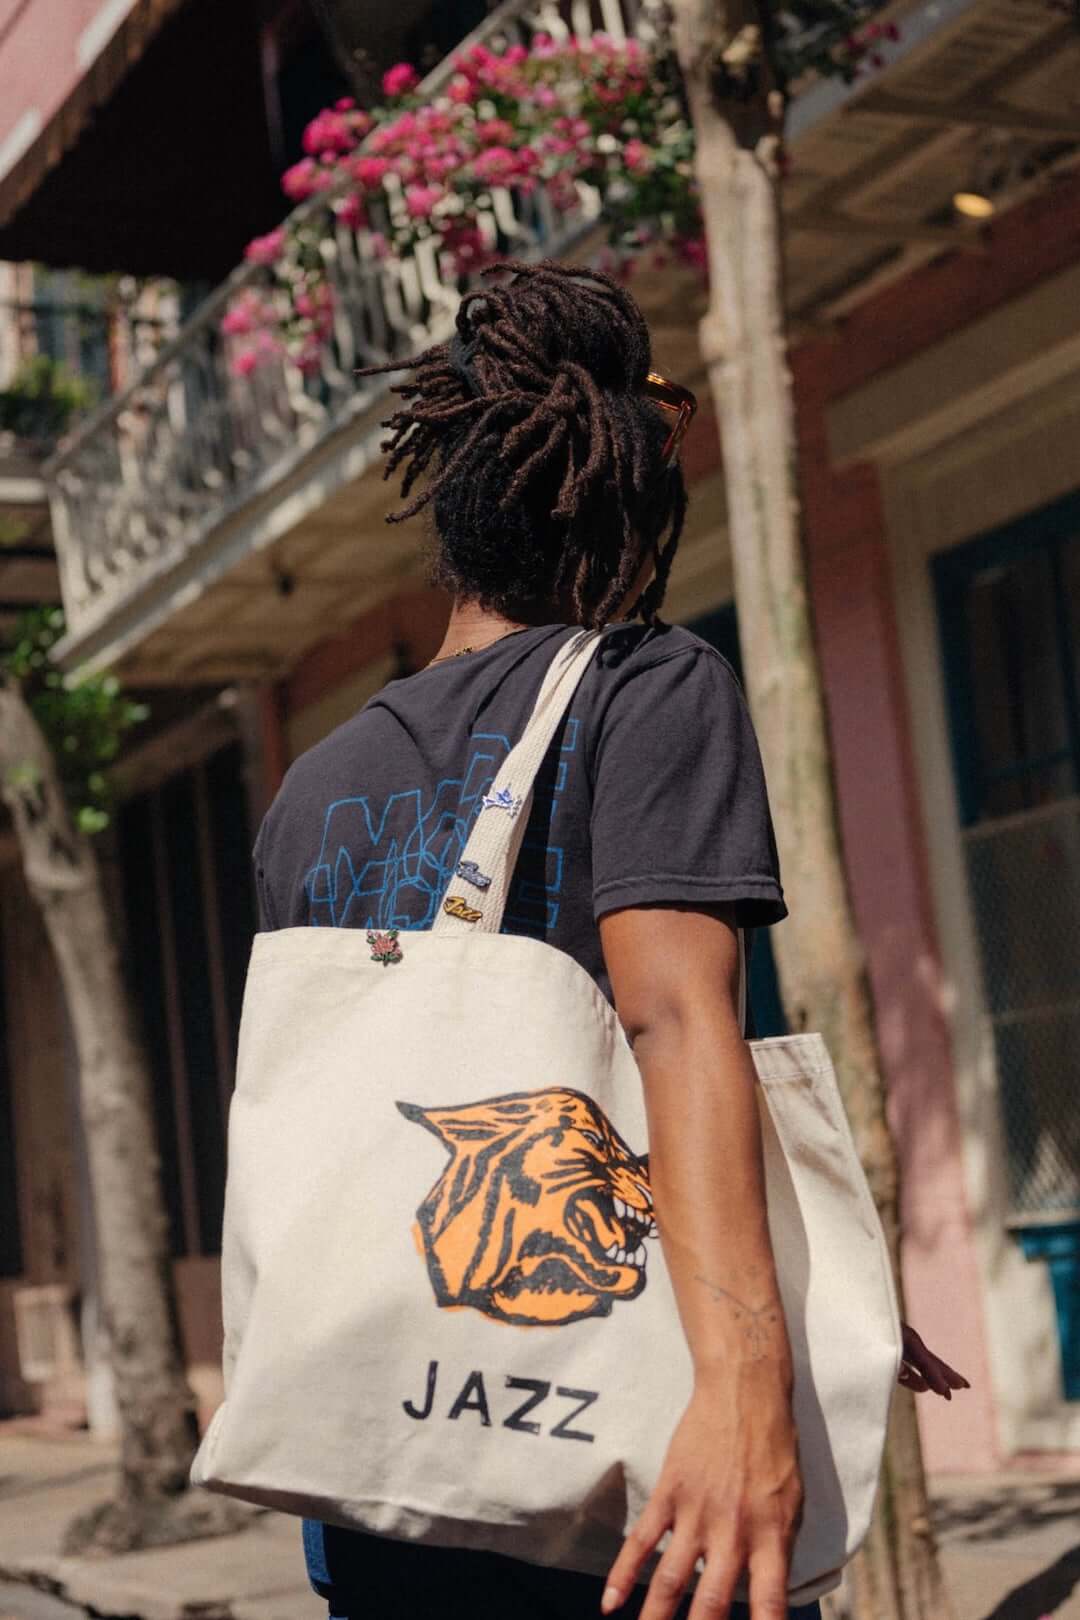 Jazz Cat Tote Bag - Accessories - DNO